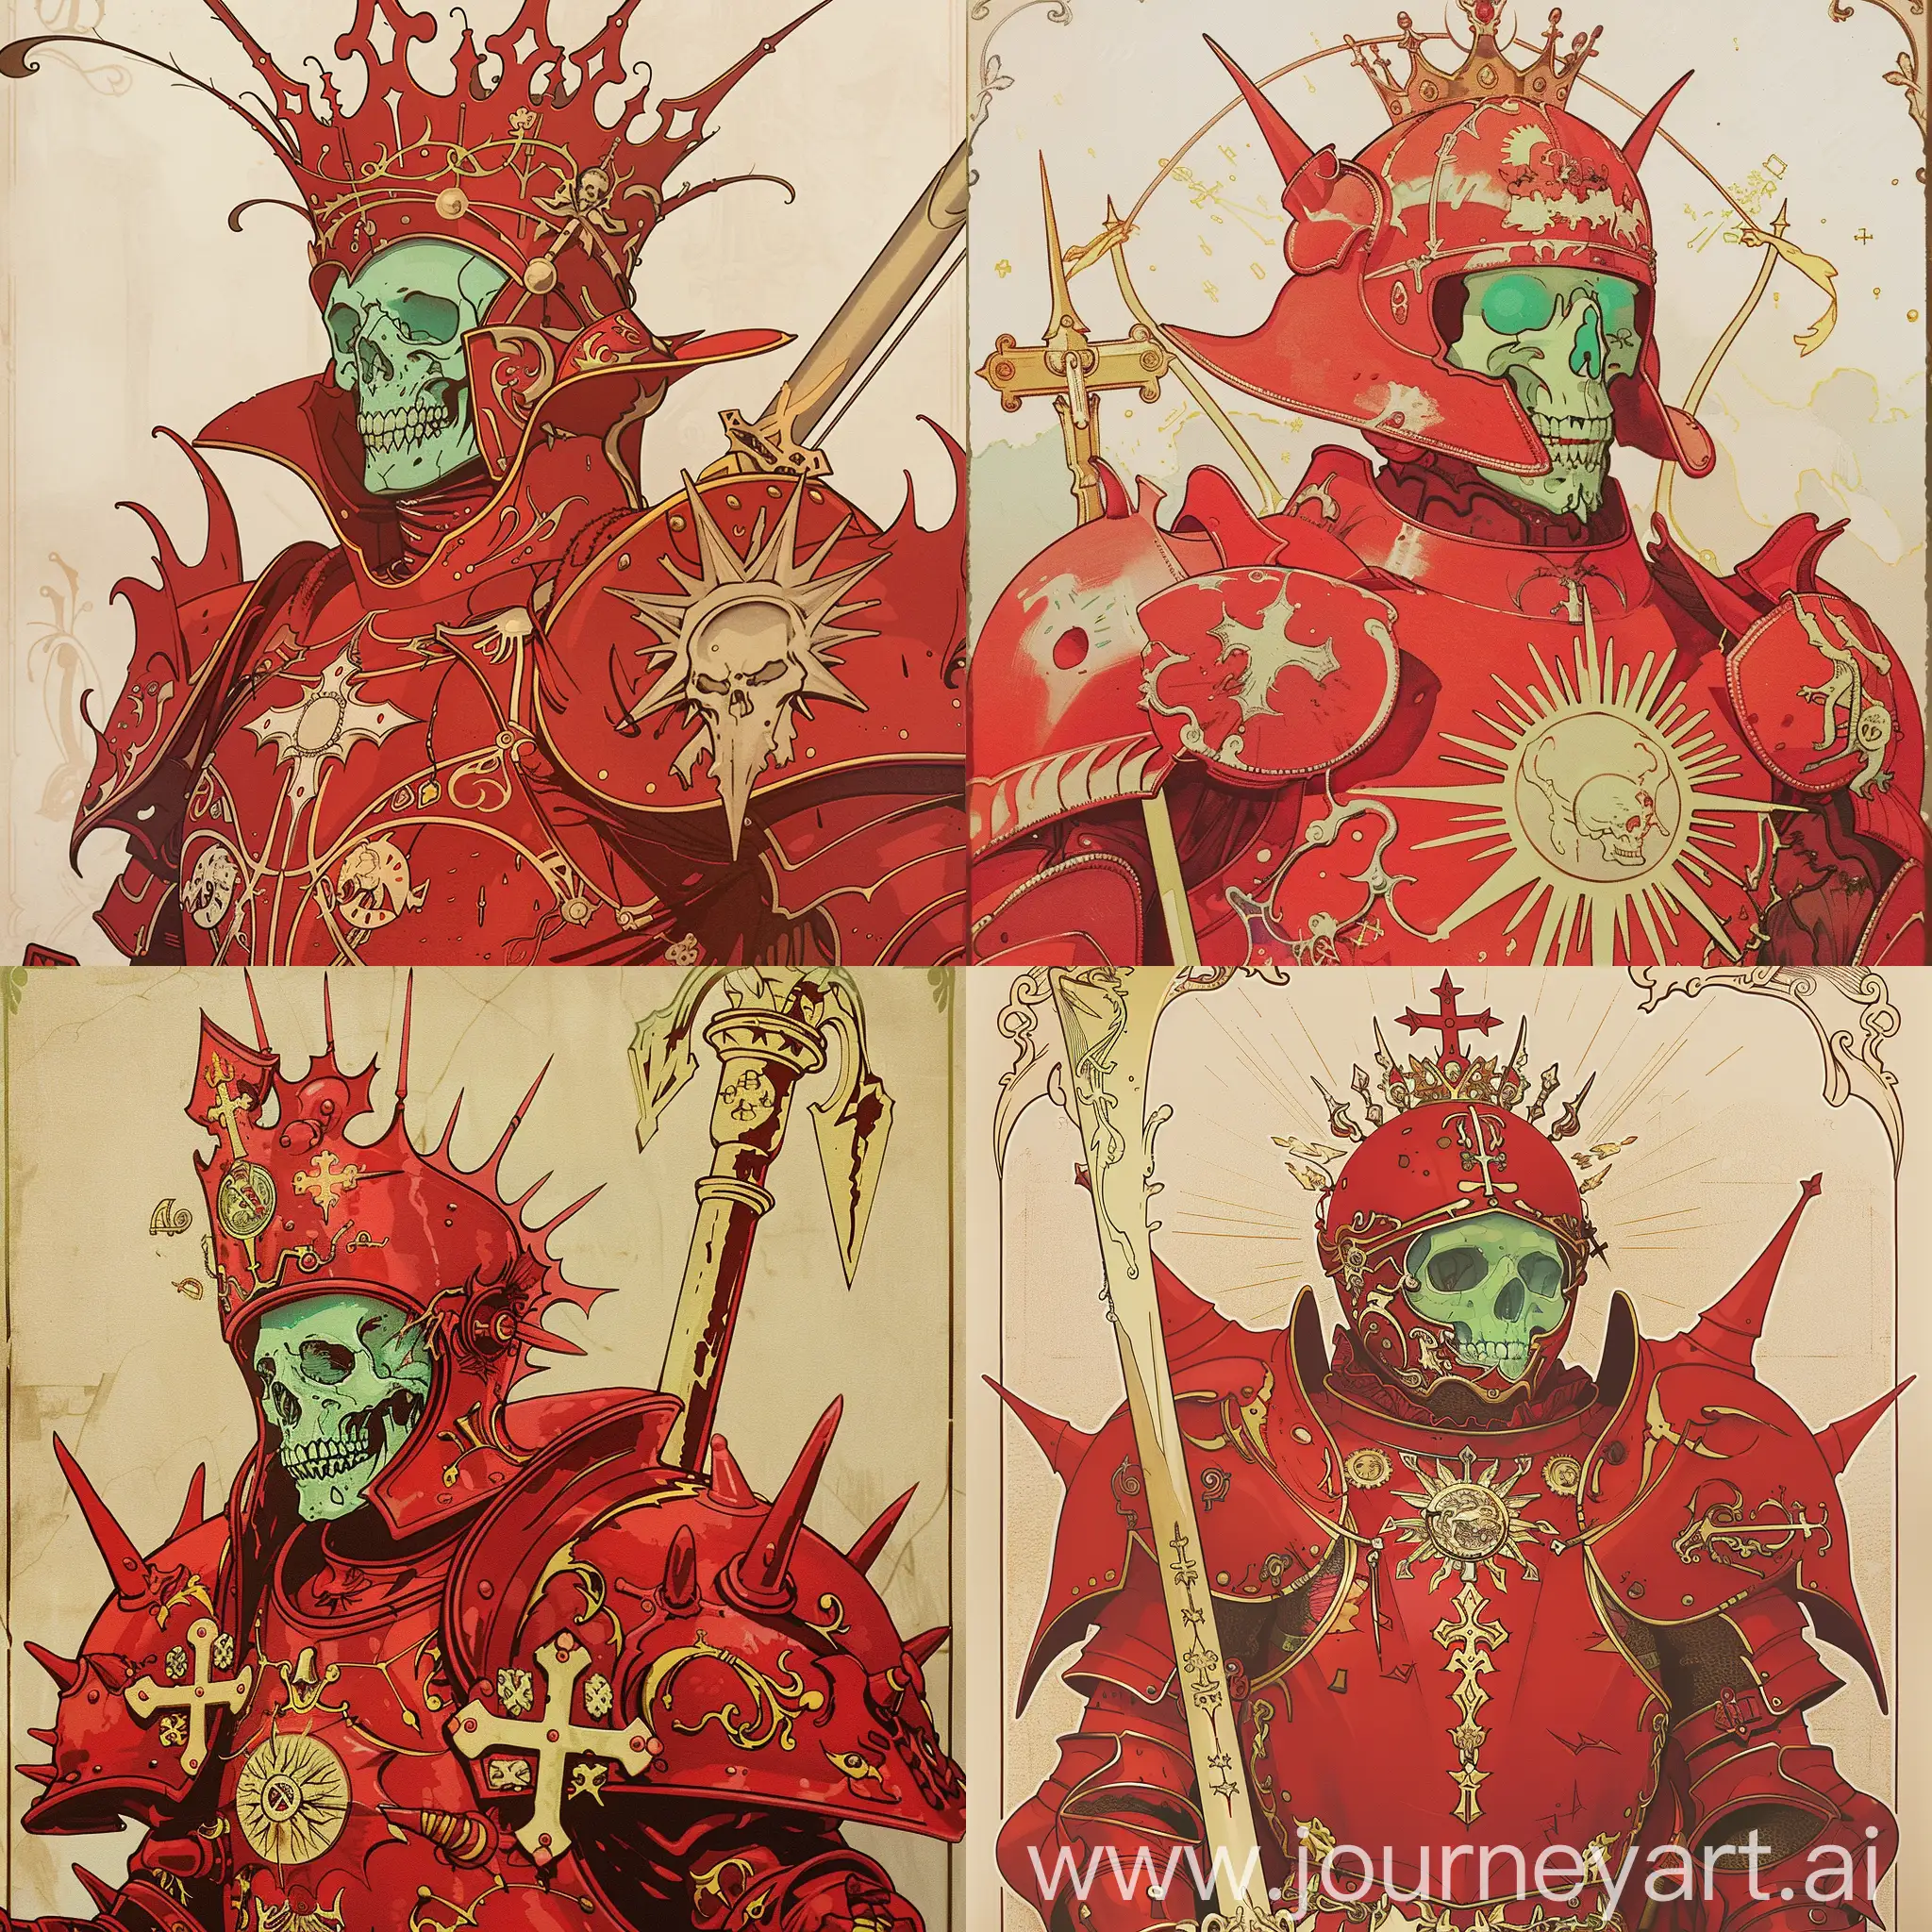 Red-Armored-Knight-with-SkullFaced-Helmet-and-Golden-Halberd-Battling-Monsters